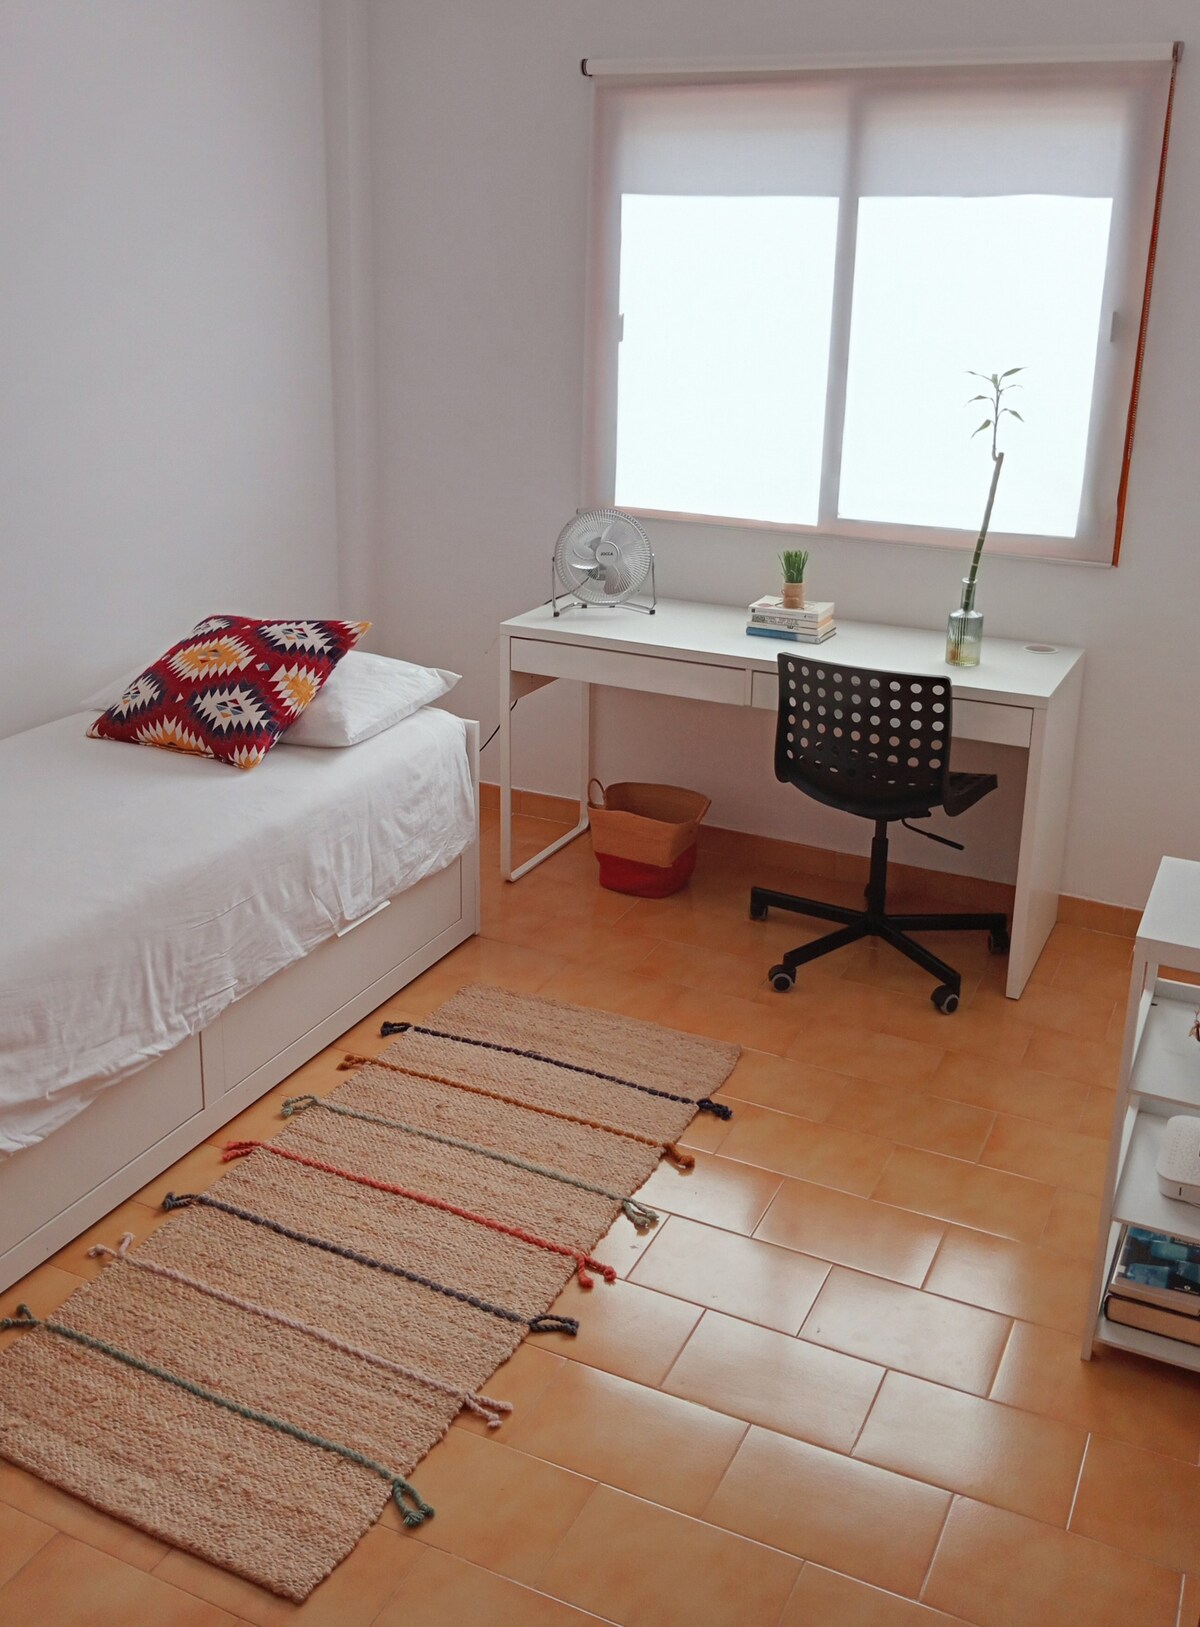 Casa Luca Y Susana.
房间和独立卫生间。